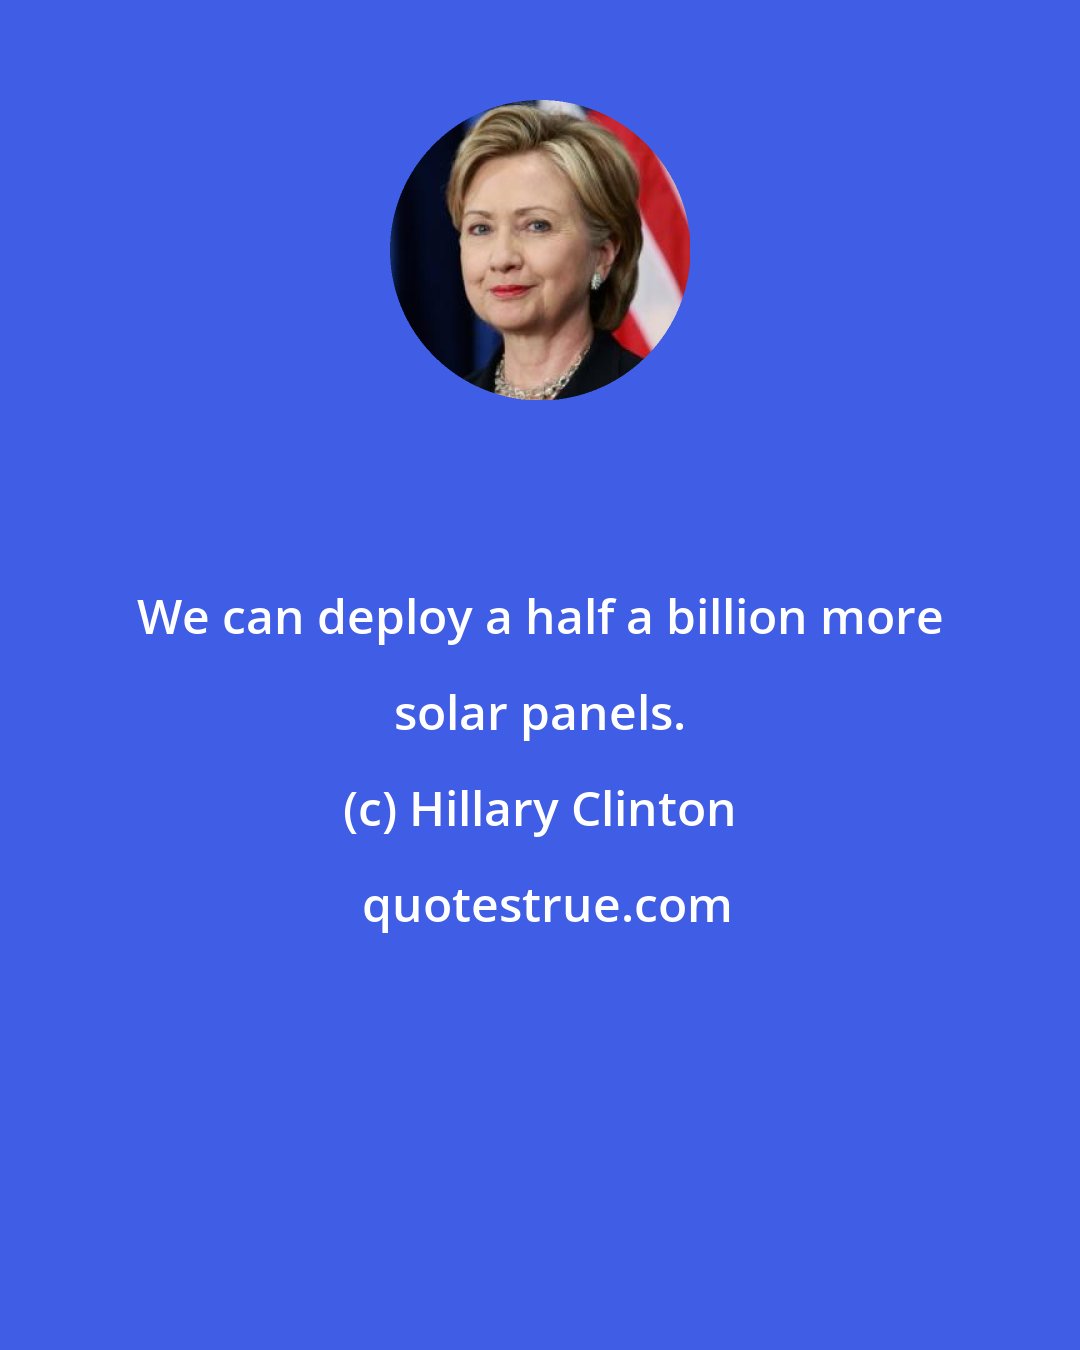 Hillary Clinton: We can deploy a half a billion more solar panels.